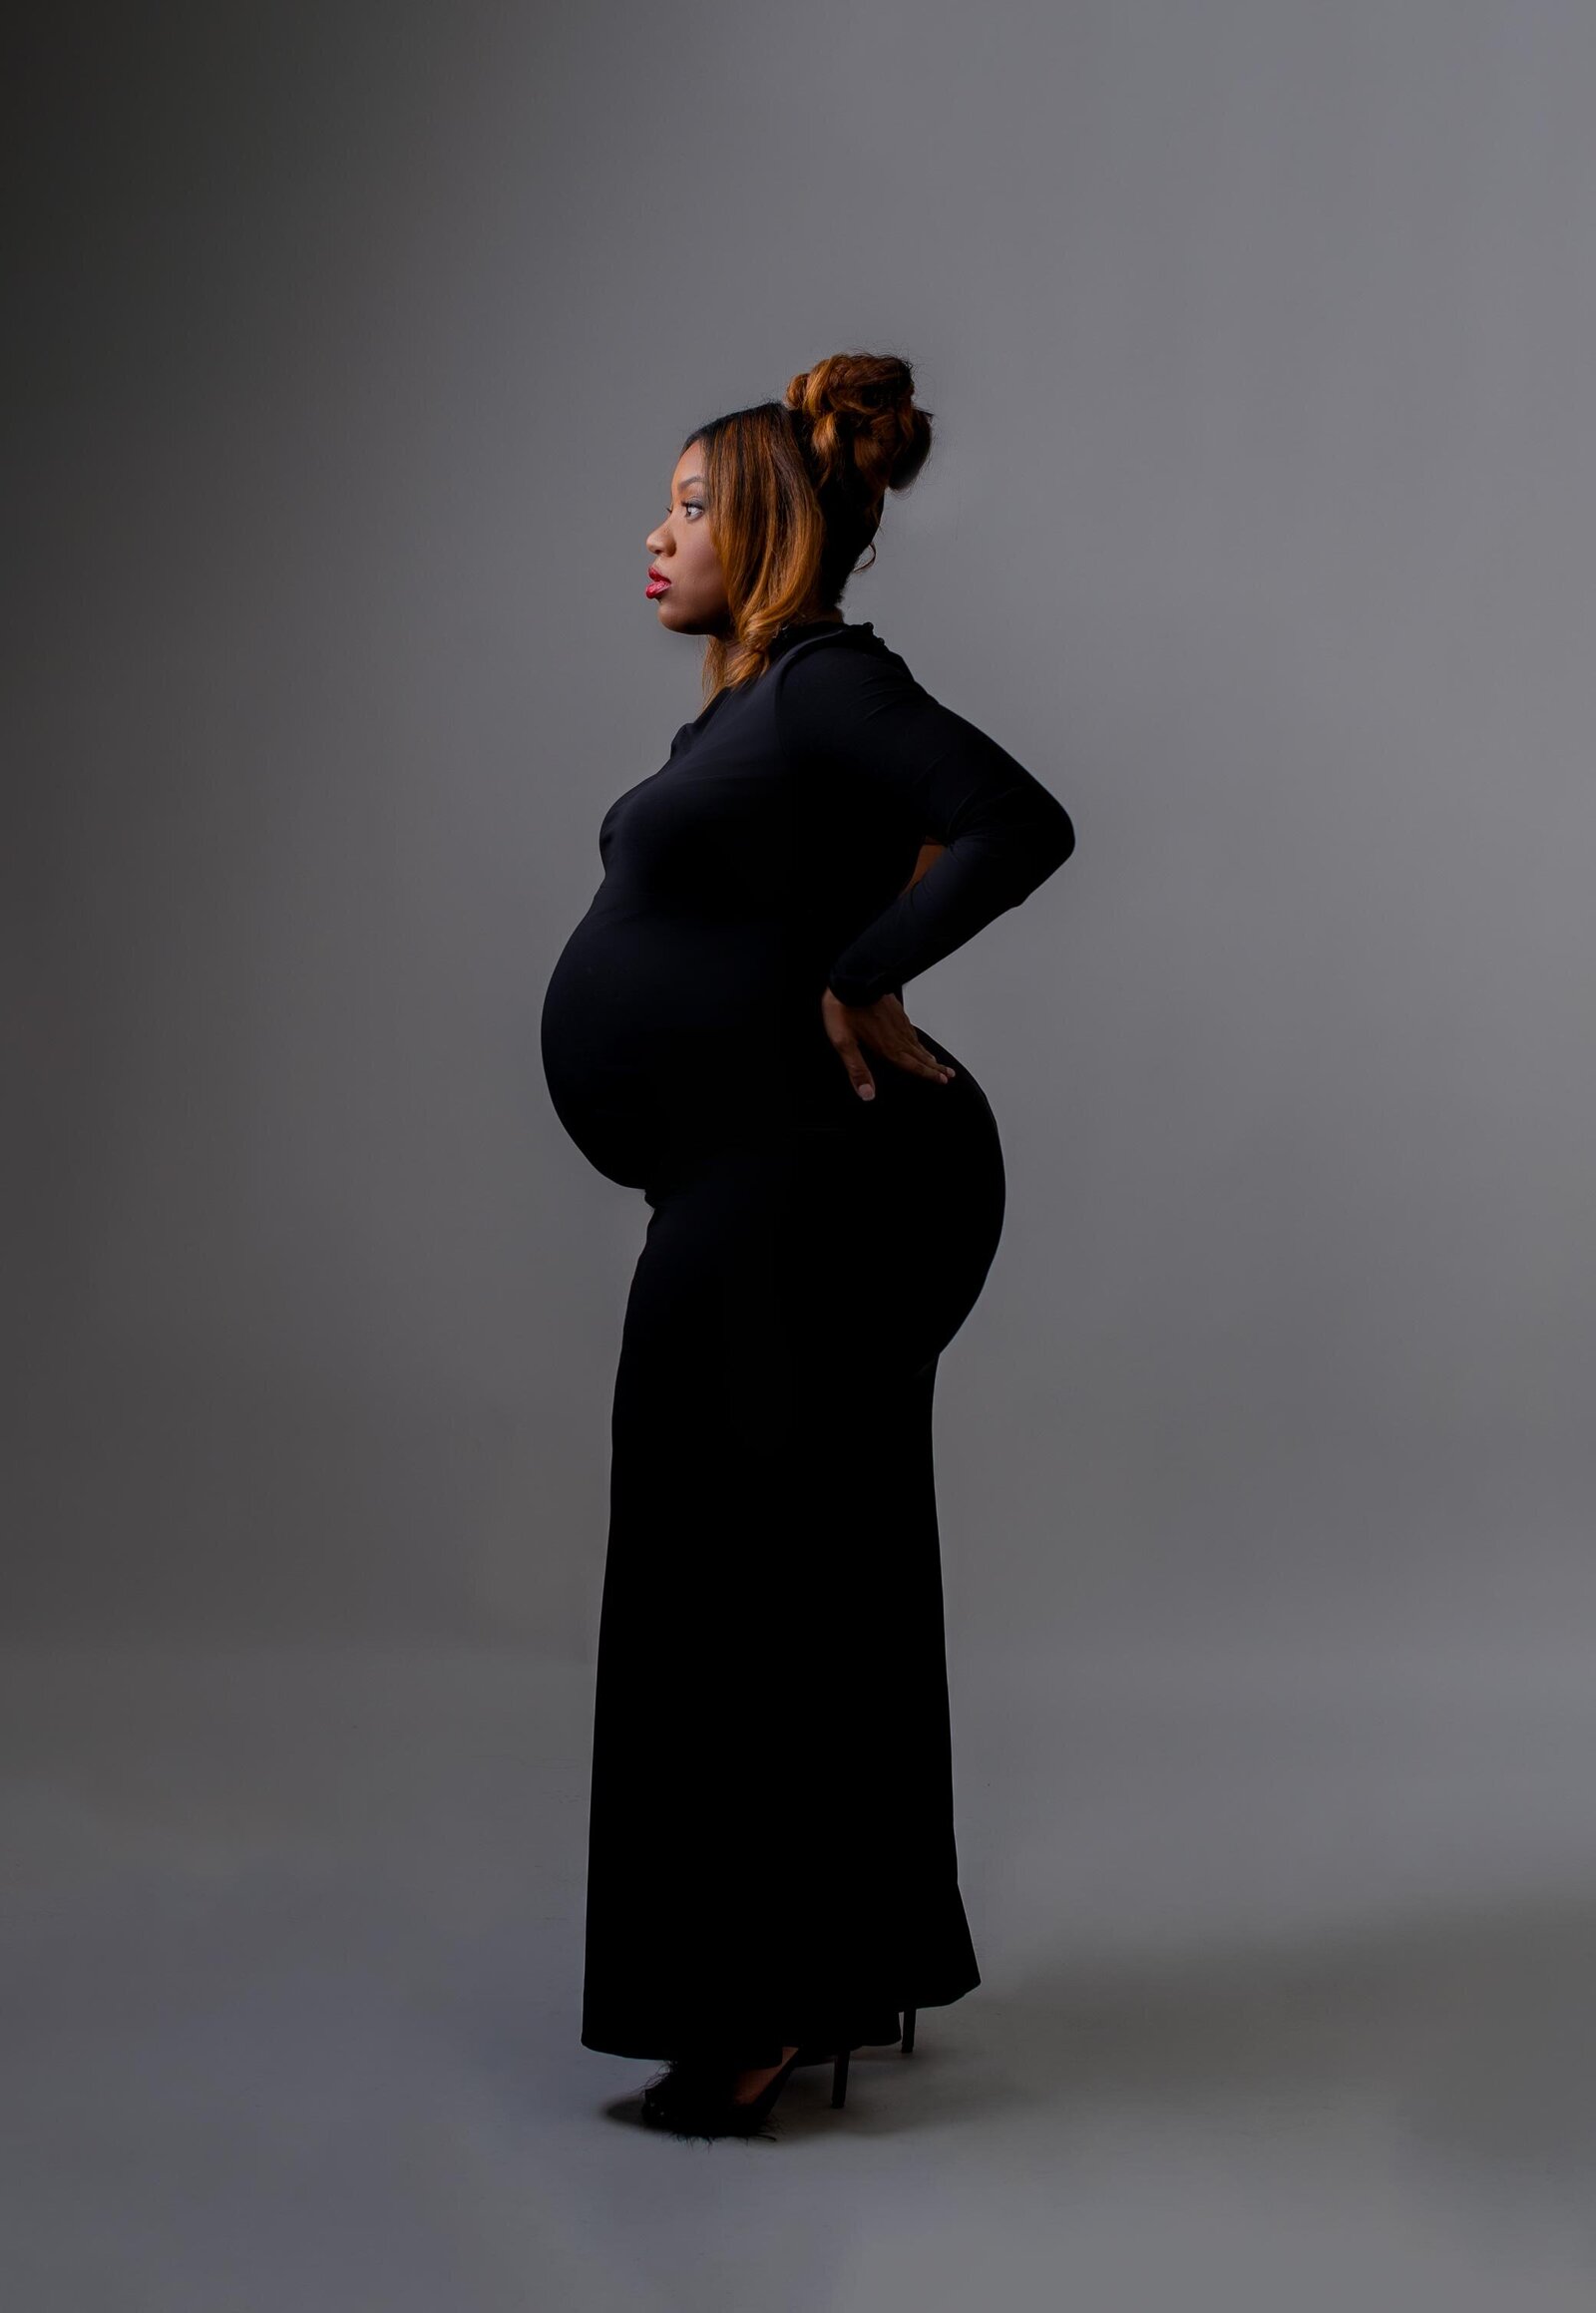 Pregnant mom posing